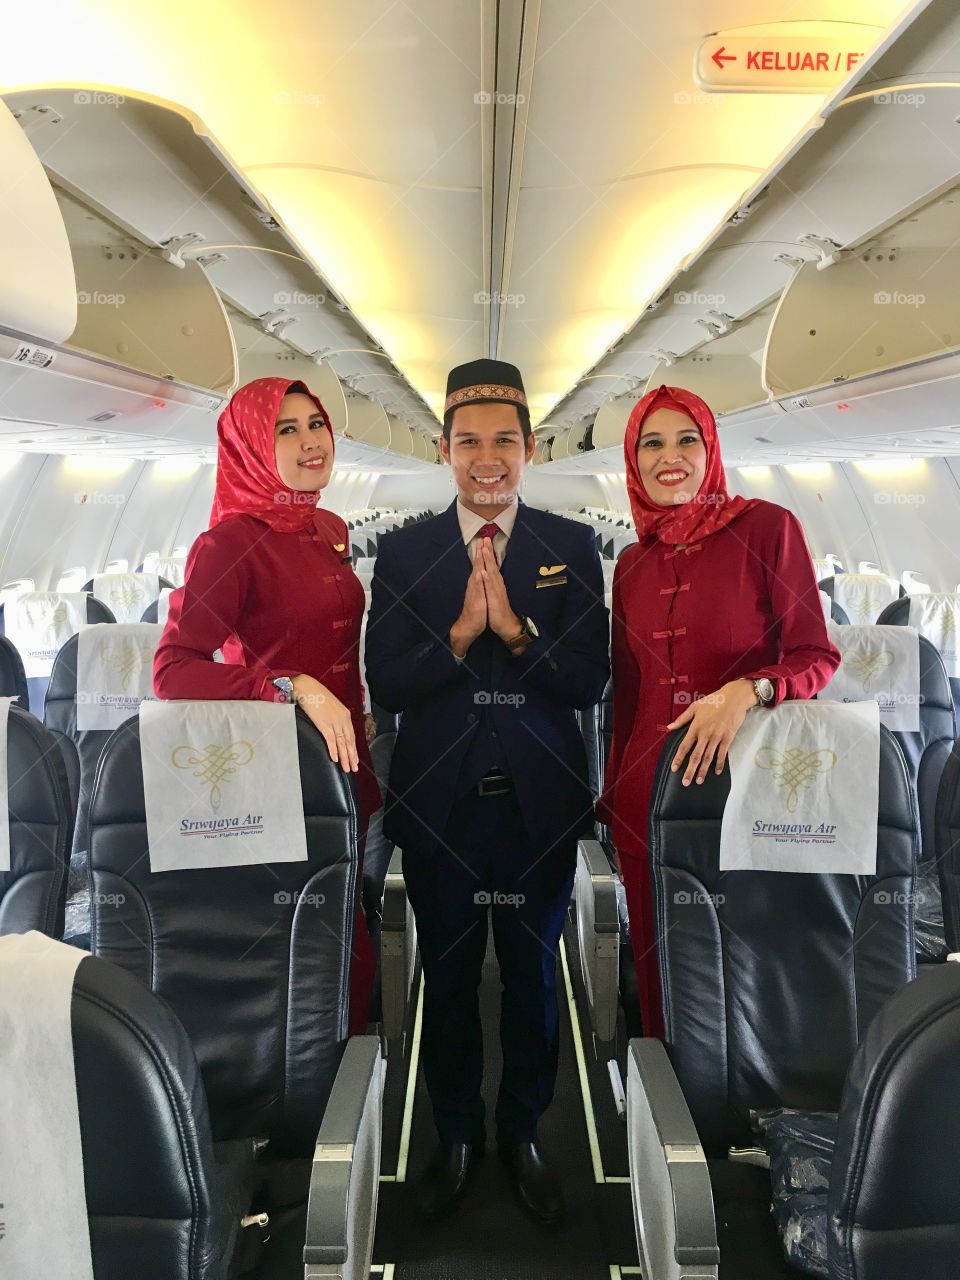 Hajj flight from pekanbaru city to sri lanka